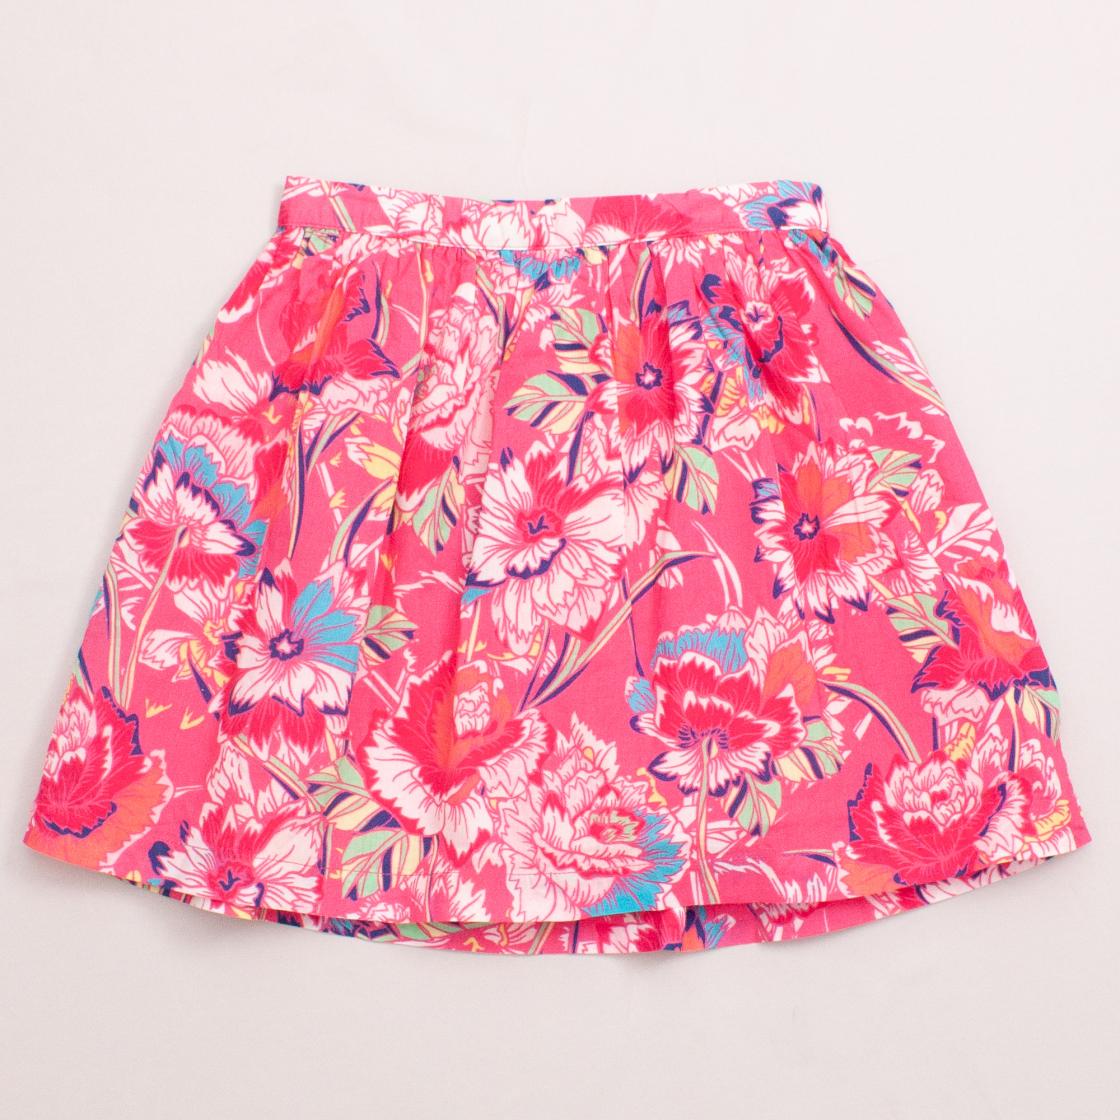 Gap Floral Skirt